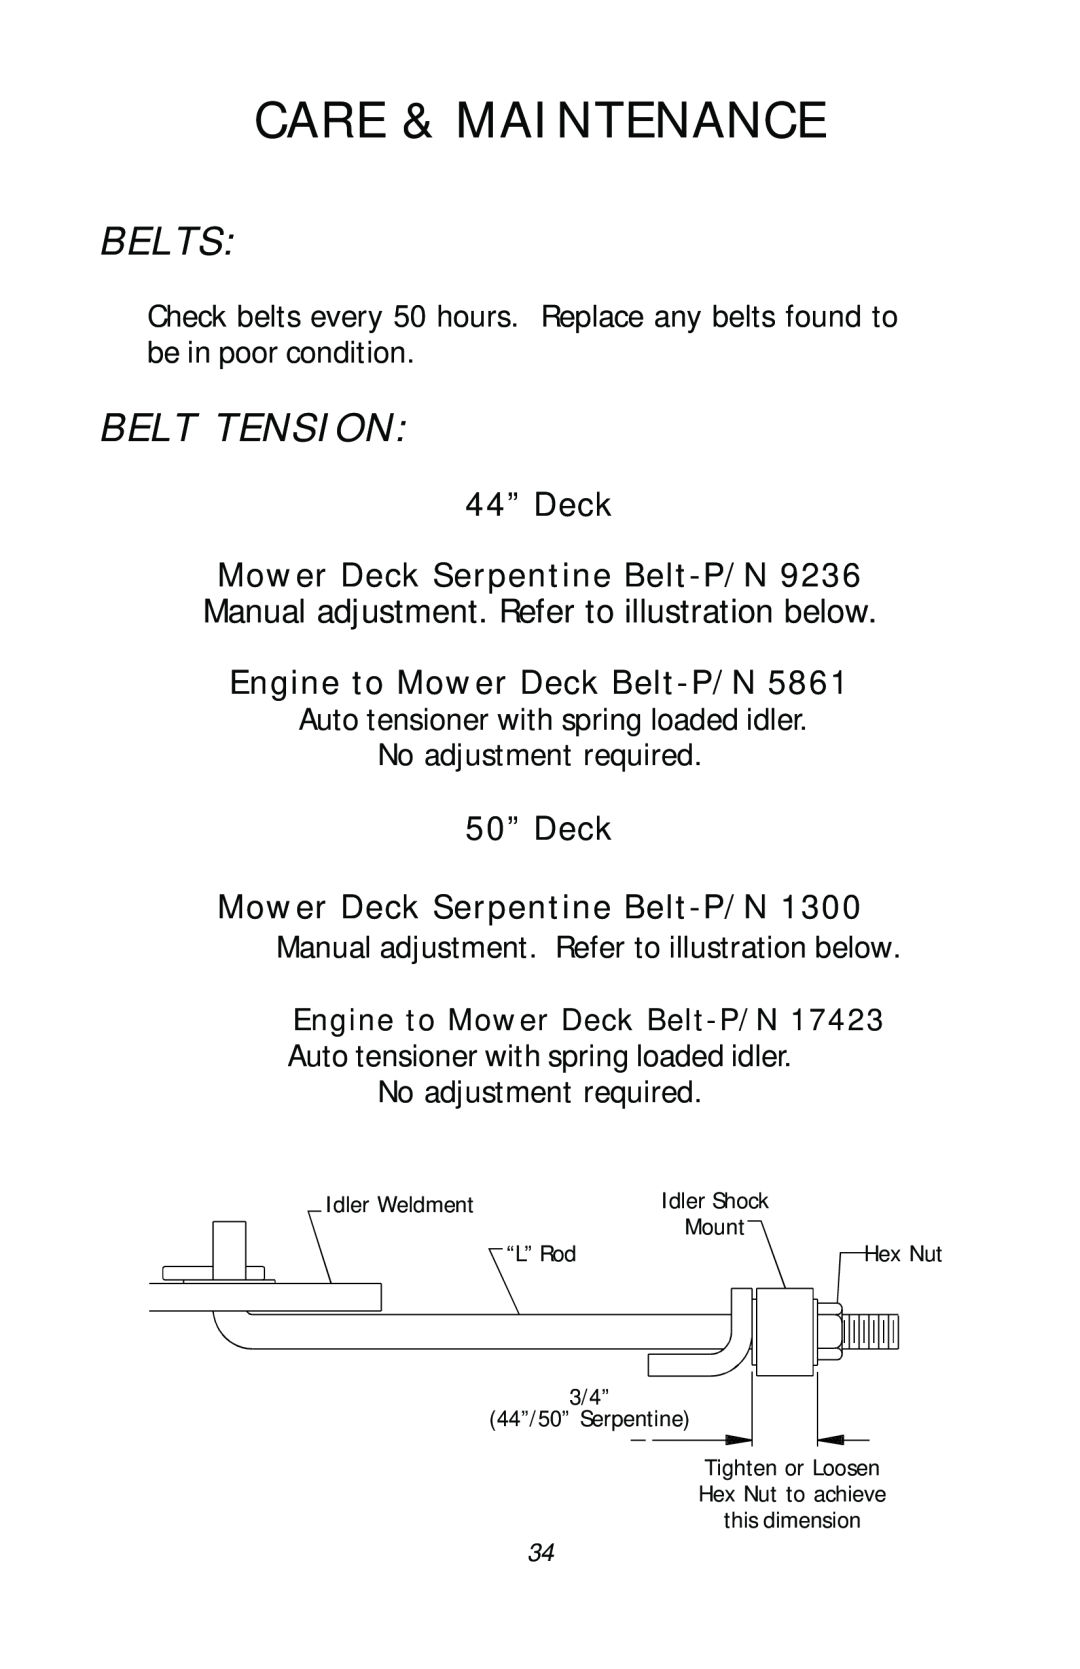 Dixon ZTR RAM 50, 17411-1103 manual Belts, Belt Tension, Care & Maintenance, 44” Deck, Engine to Mower Deck Belt-P/N5861 